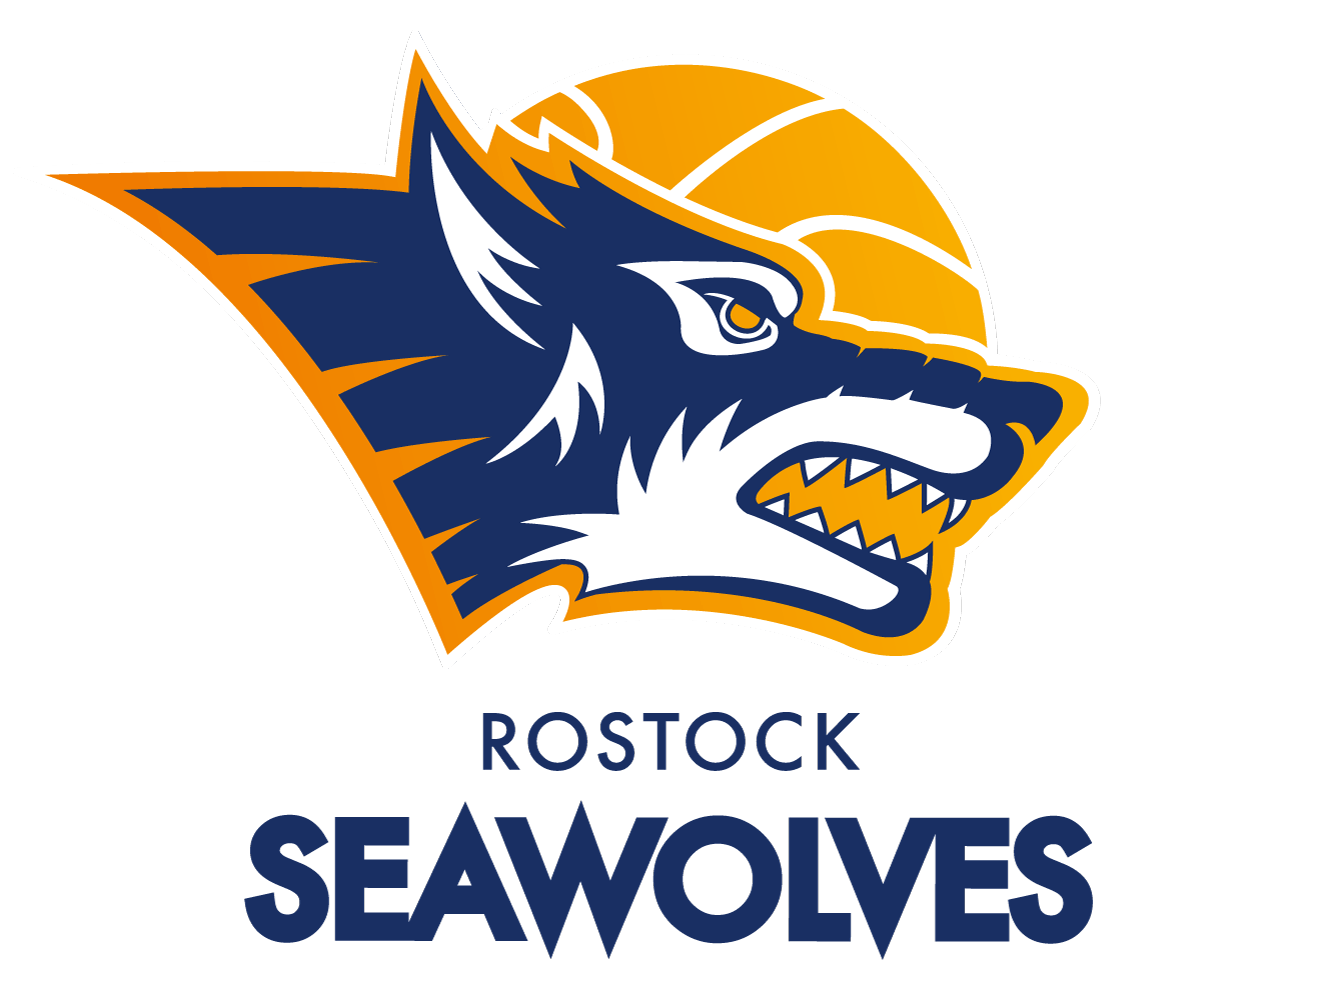 ROSTOCK SEAWOLVES Logo farbig